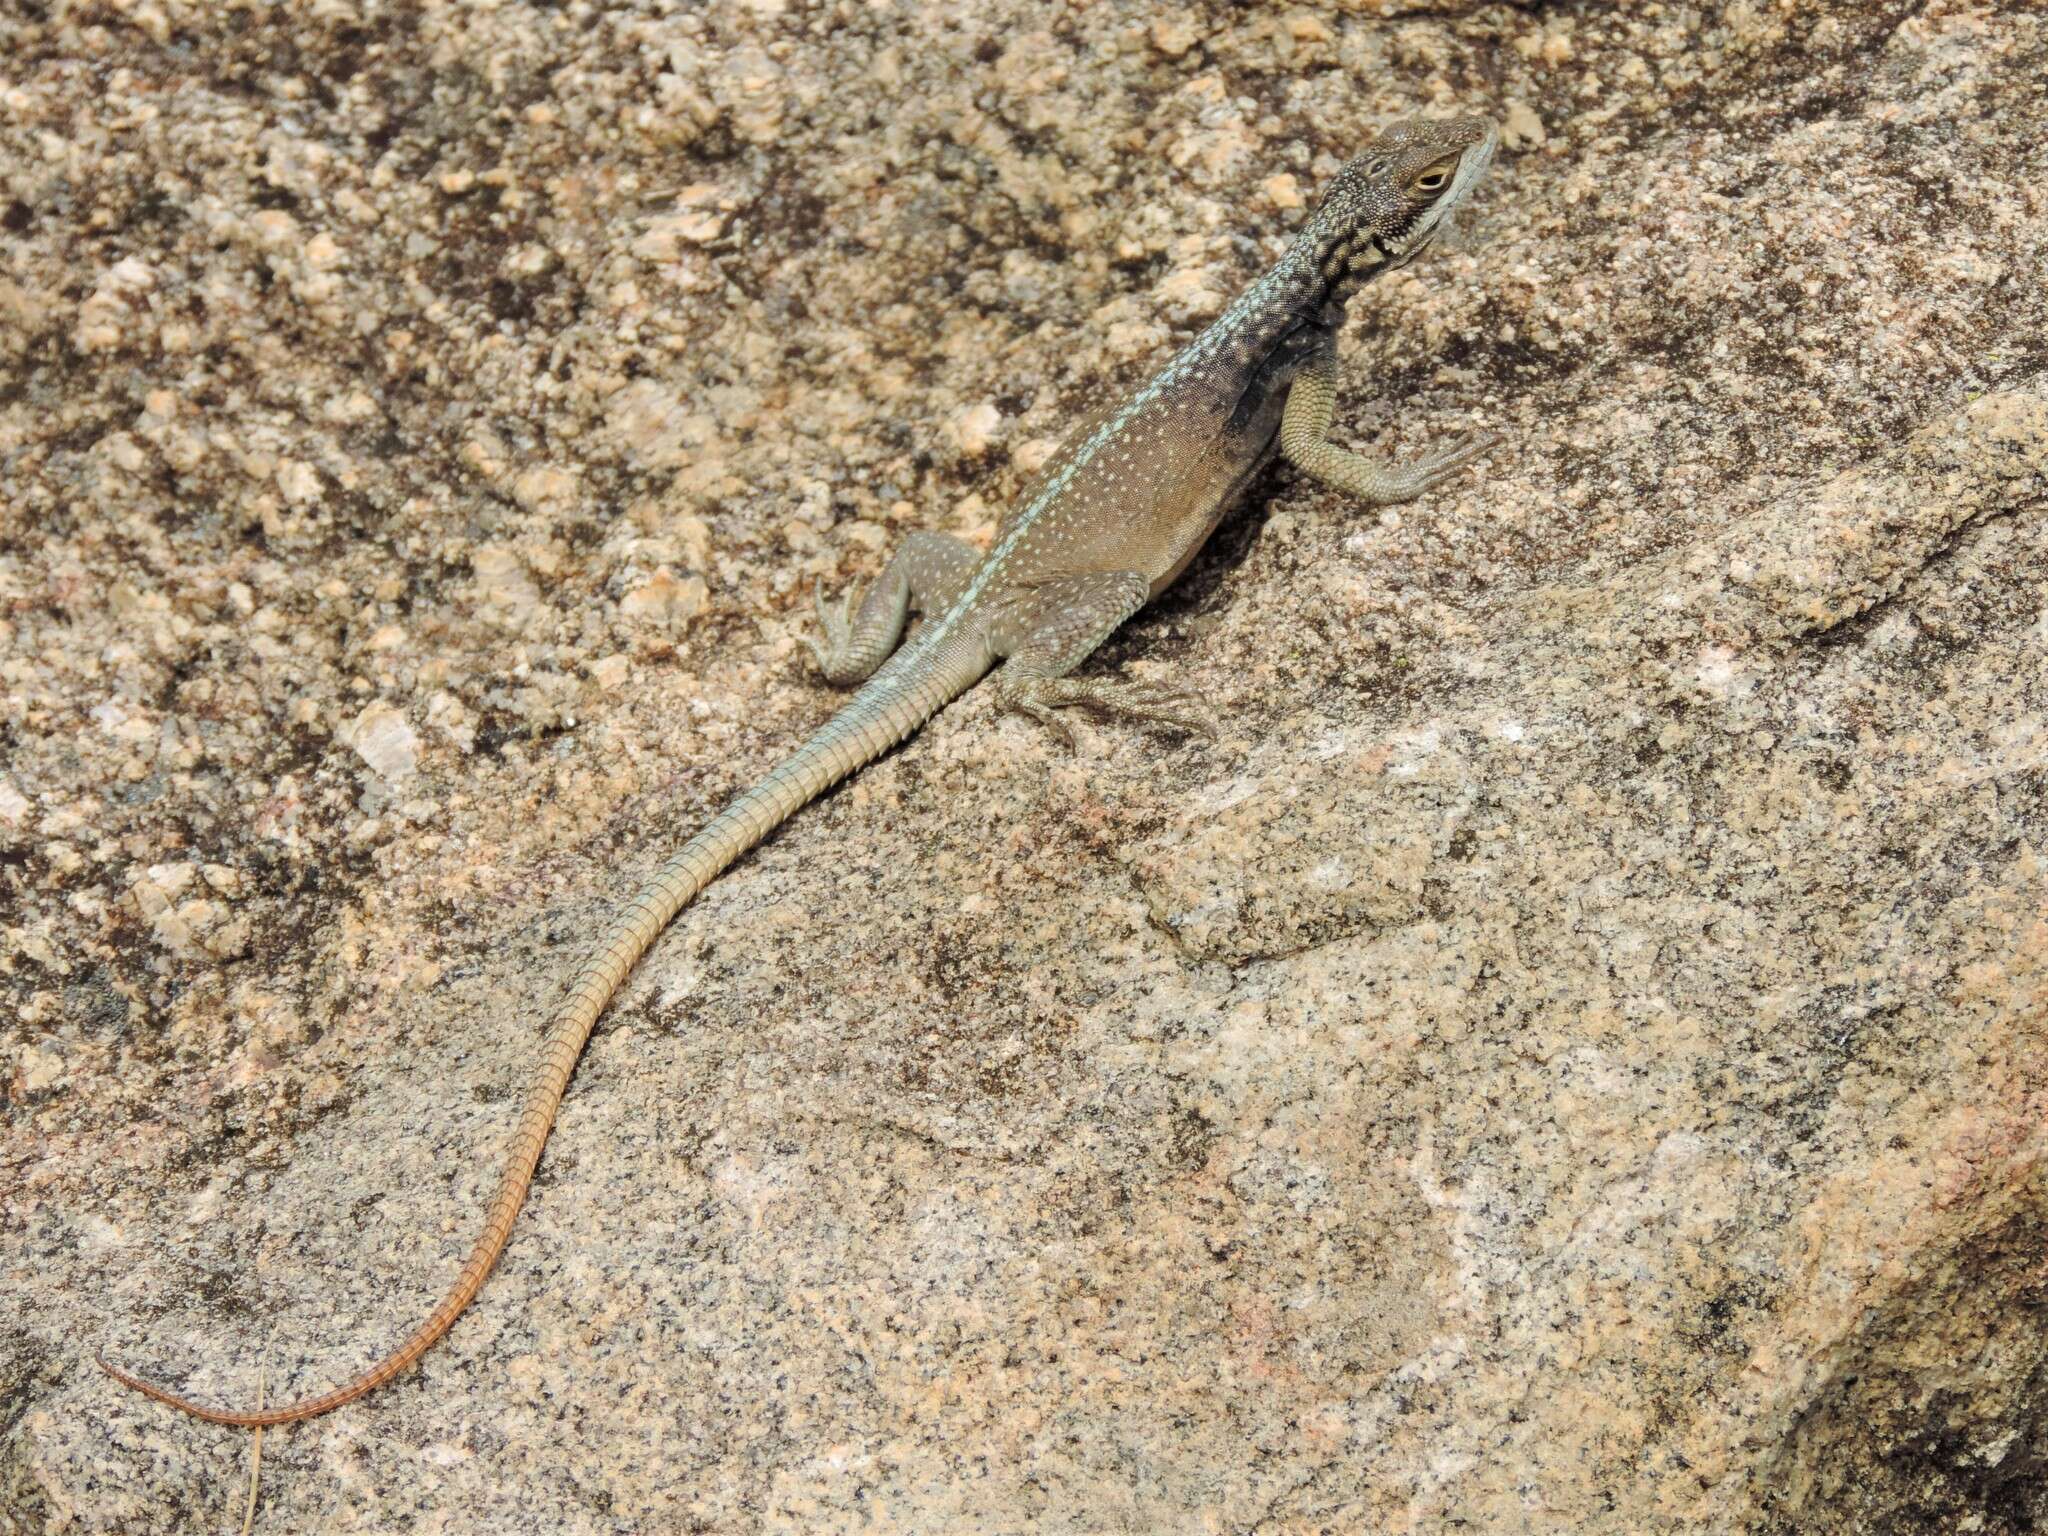 Image of Grandidier's Madagascar Swift